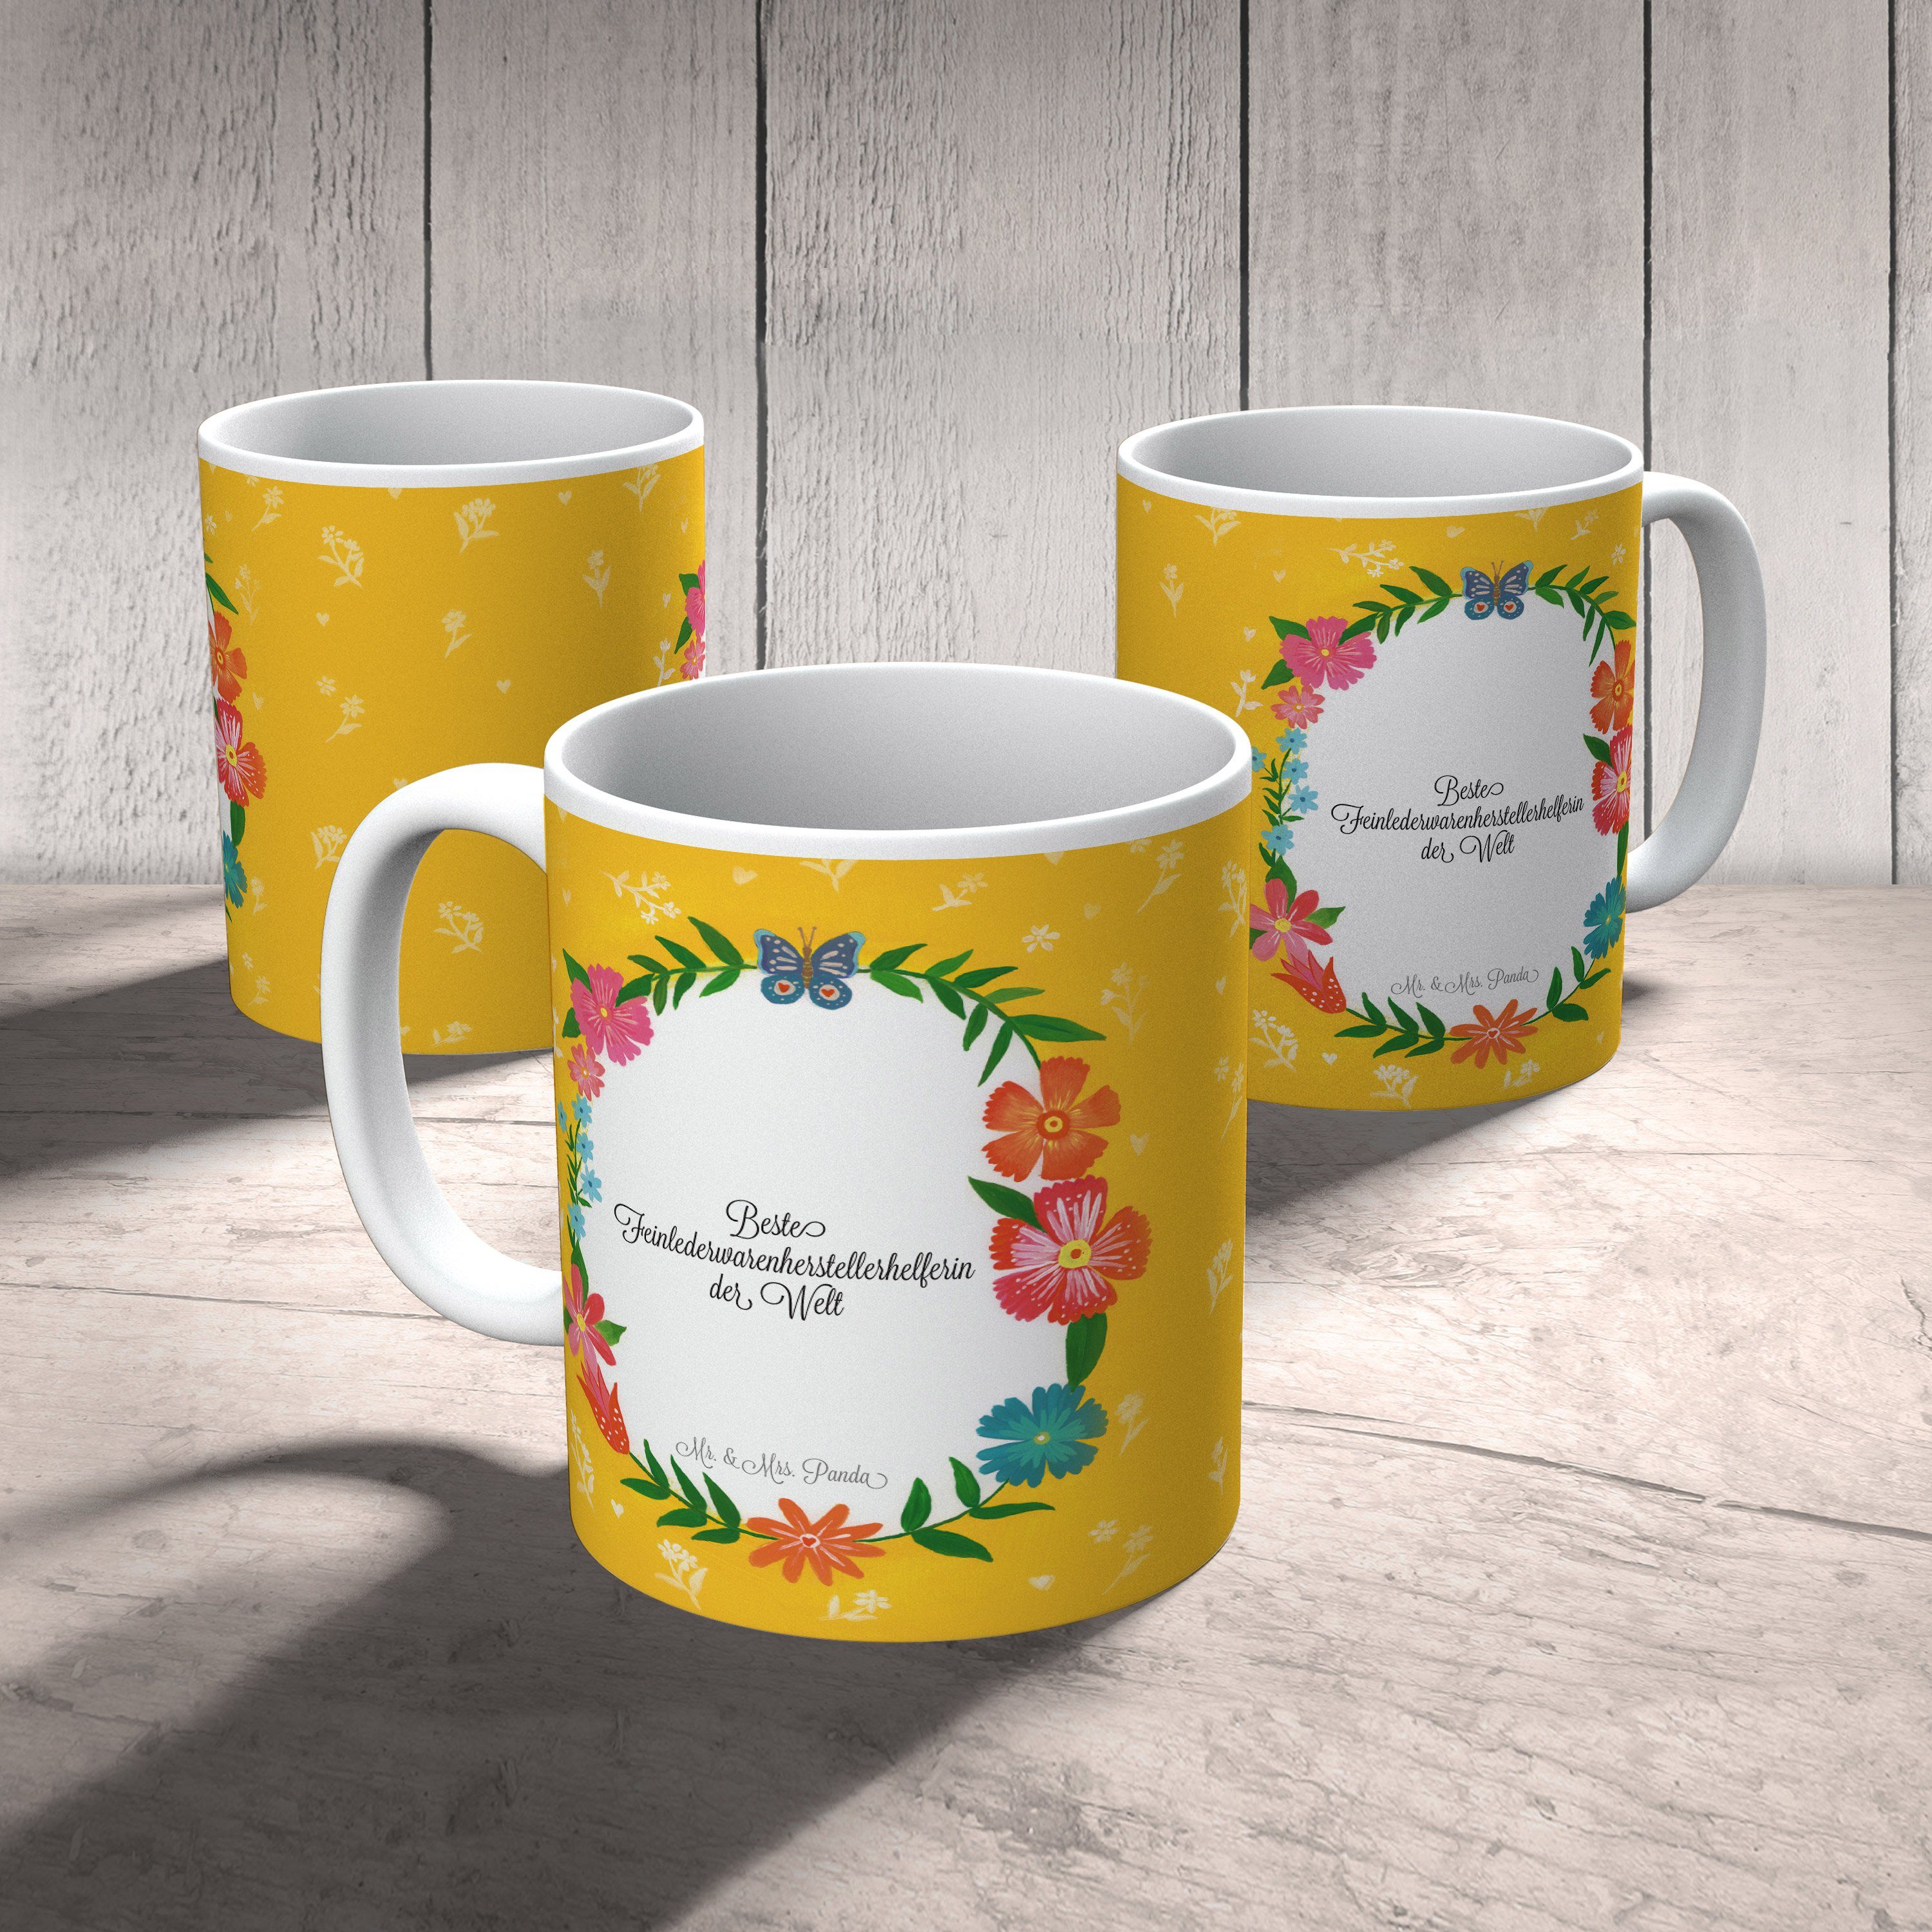 Mr. & Mrs. Panda Tasse Kaffeebecher, - Feinlederwarenherstellerhelferin Bür, Geschenk, Keramik Tasse